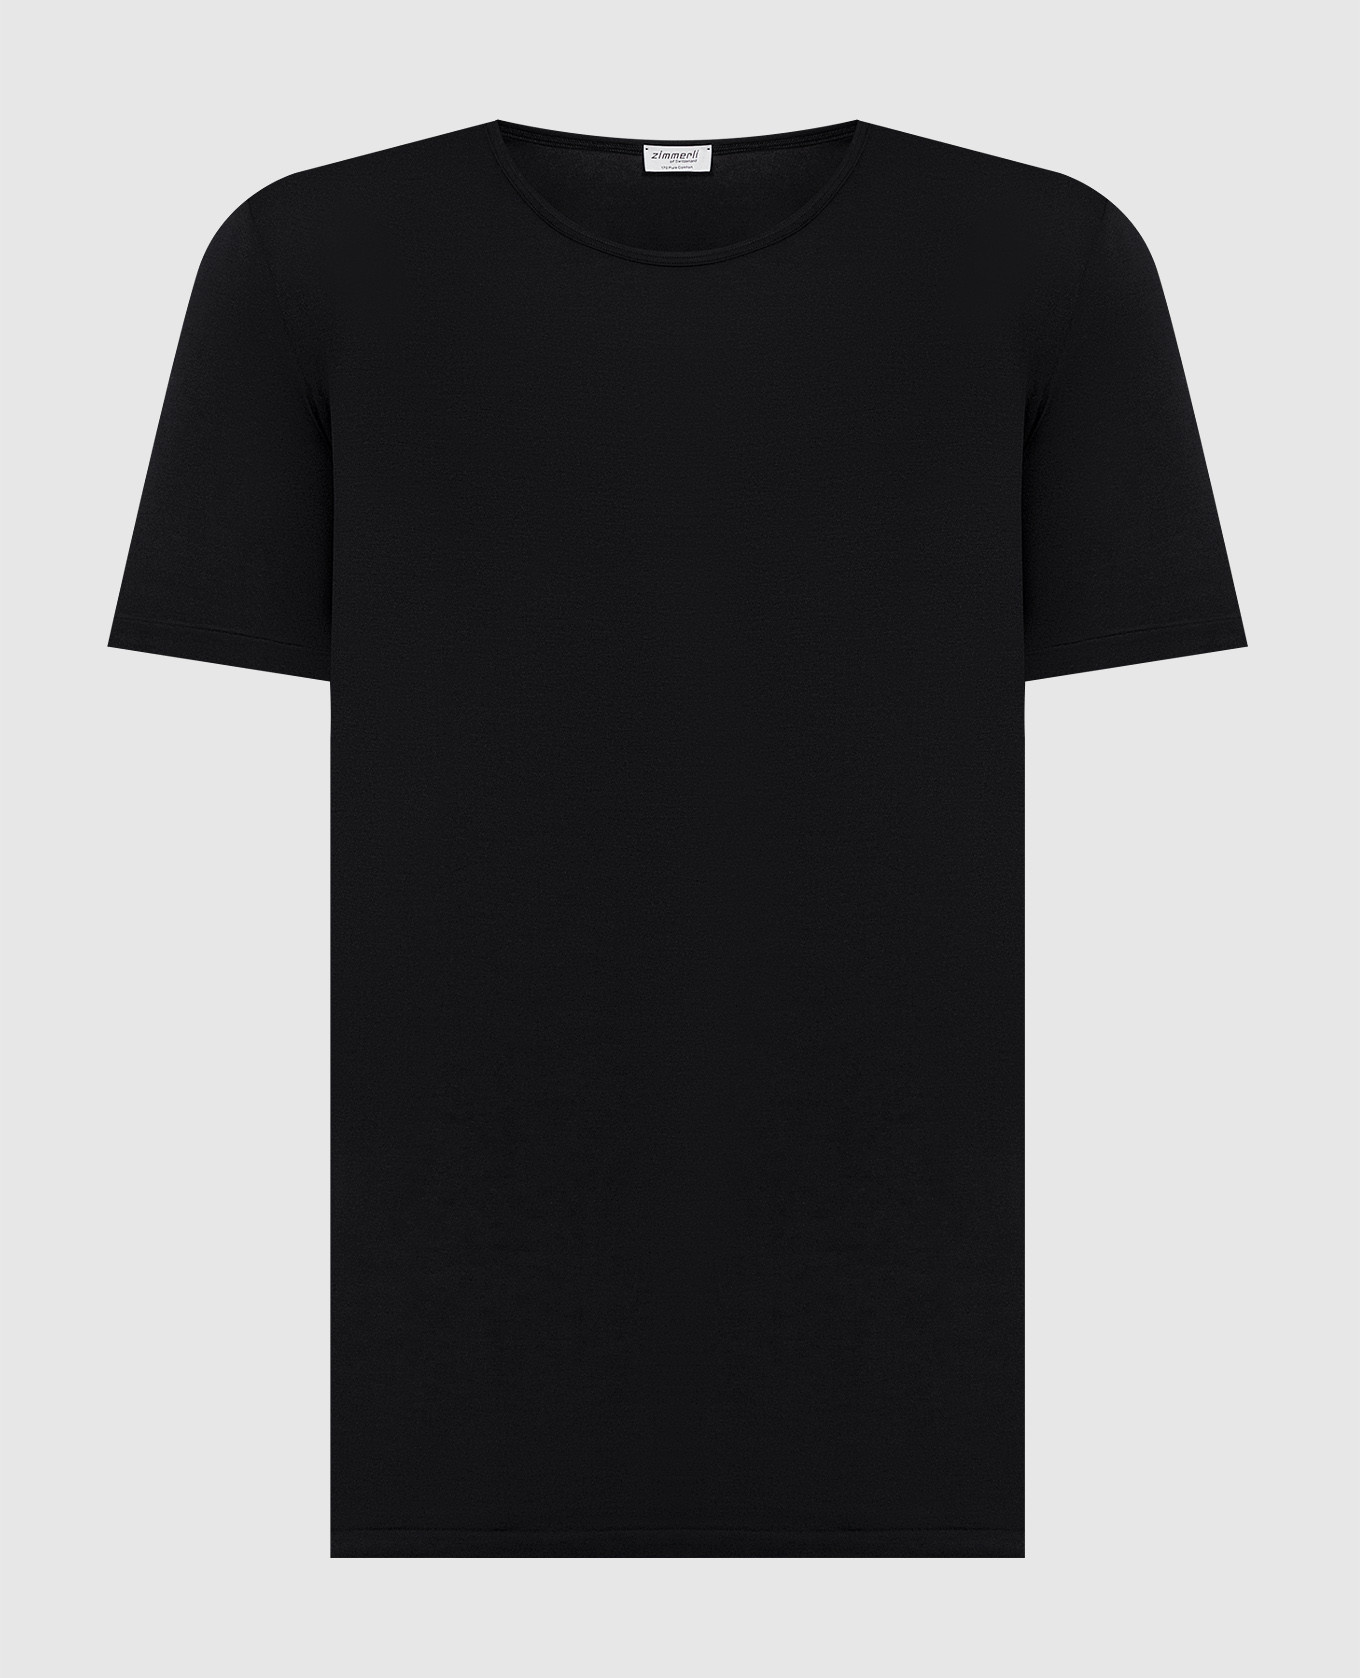 Pure Comfort black t-shirt